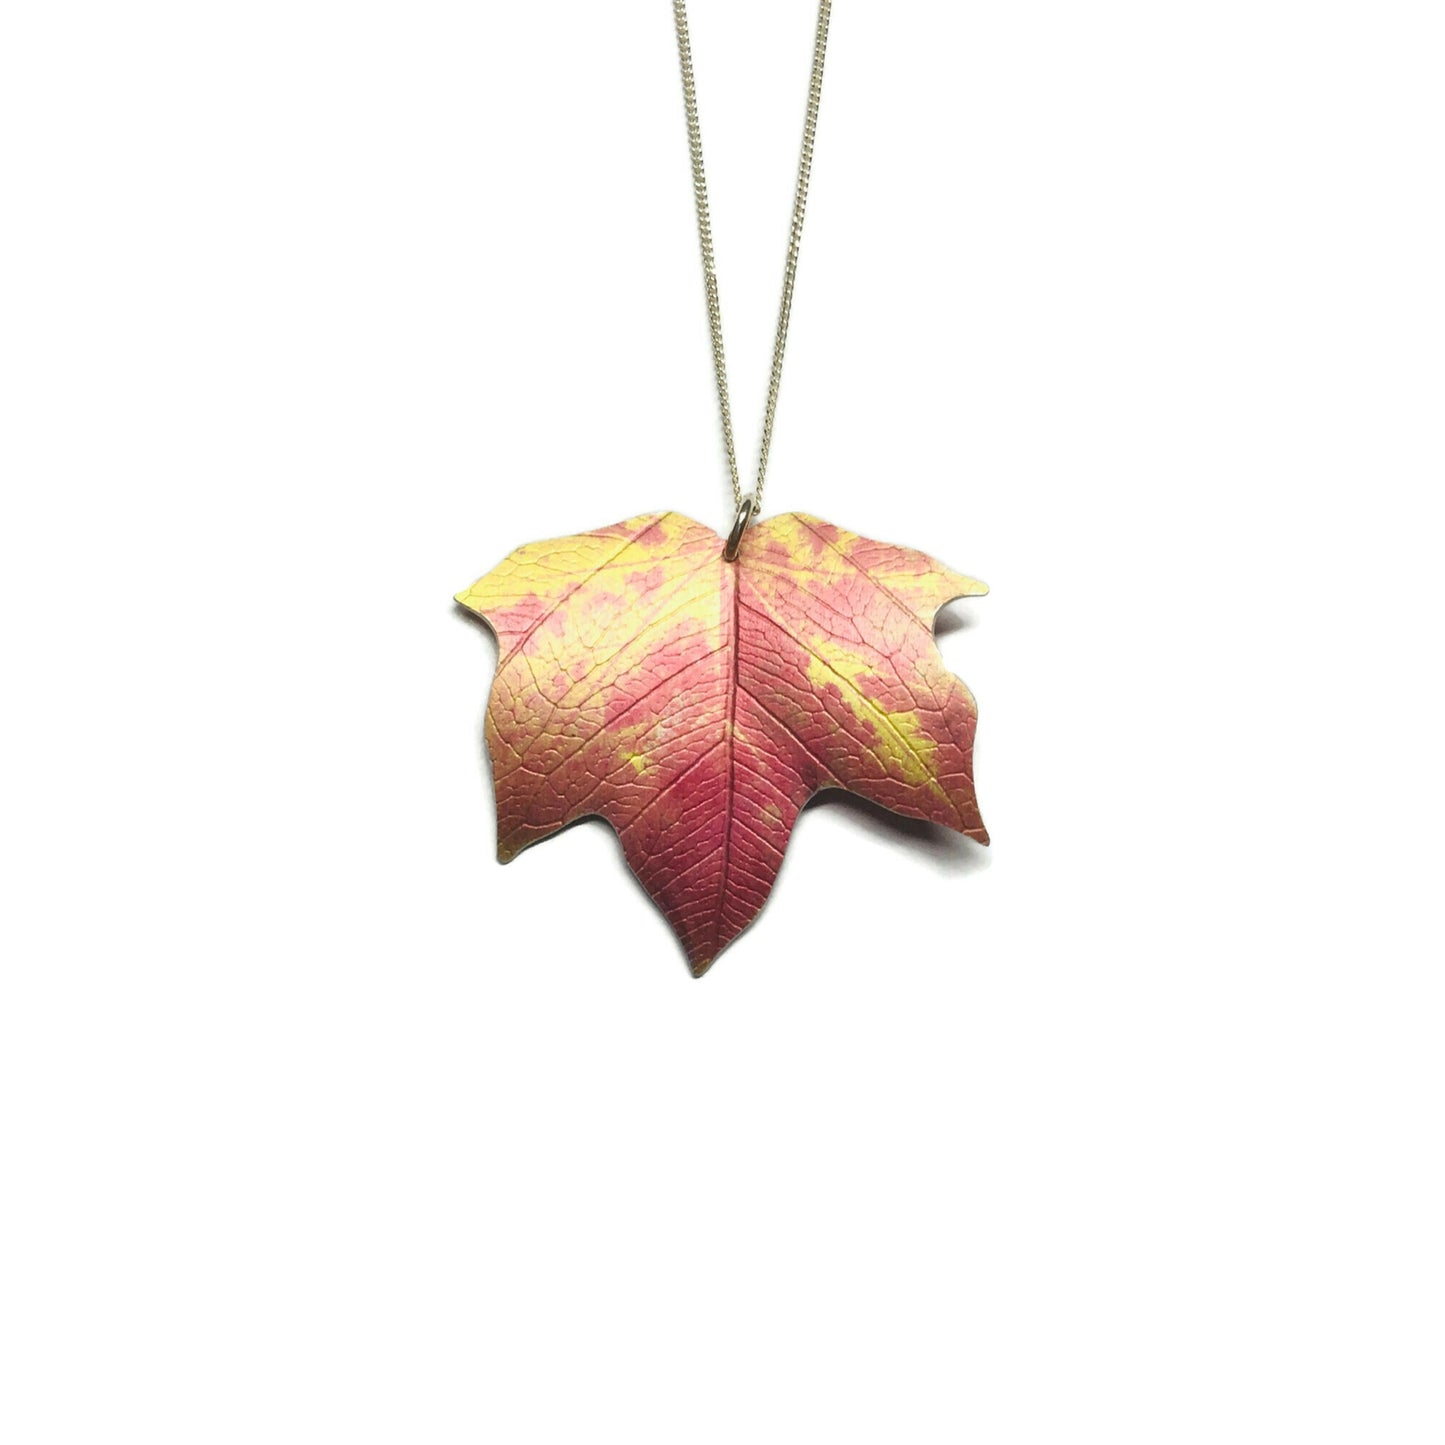 Maple leaf necklace. Winkworth